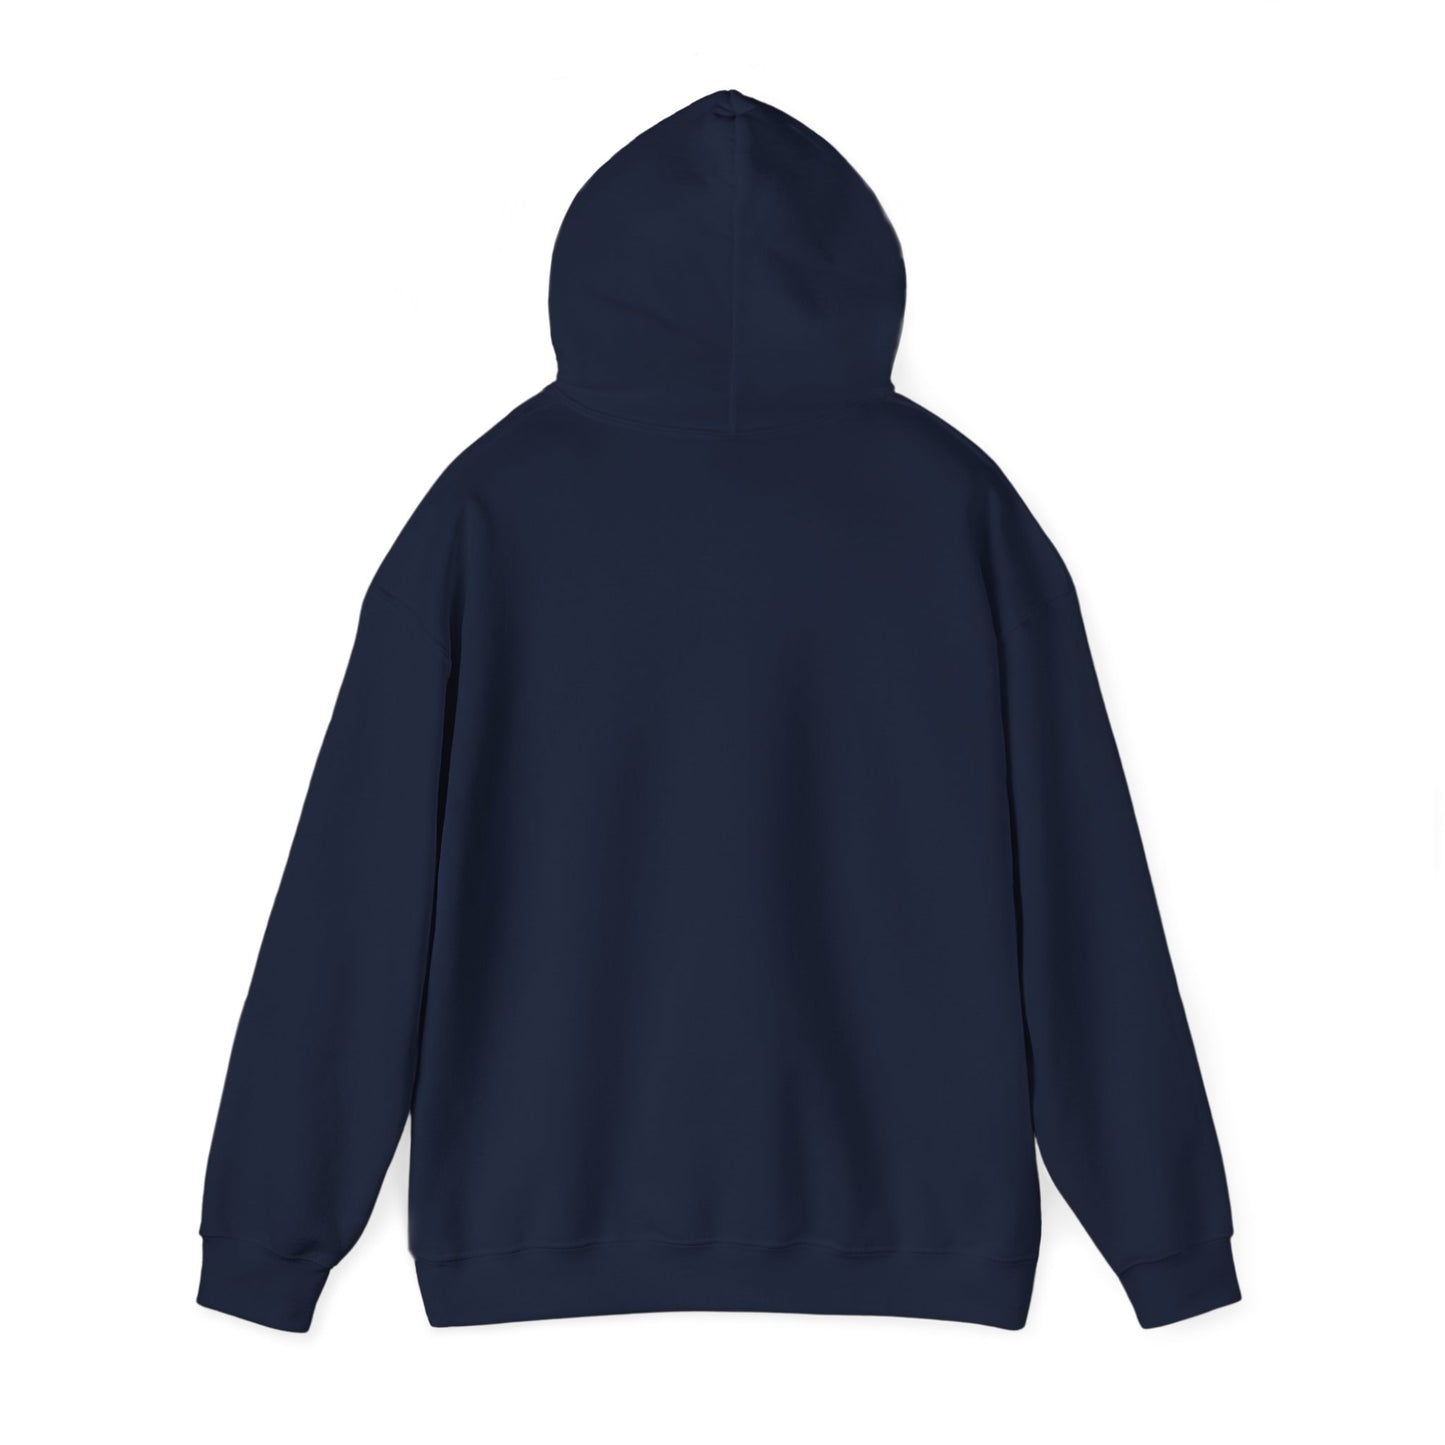 Seafire Spitfire design Unisex Heavy Blend™ Hooded Sweatshirt